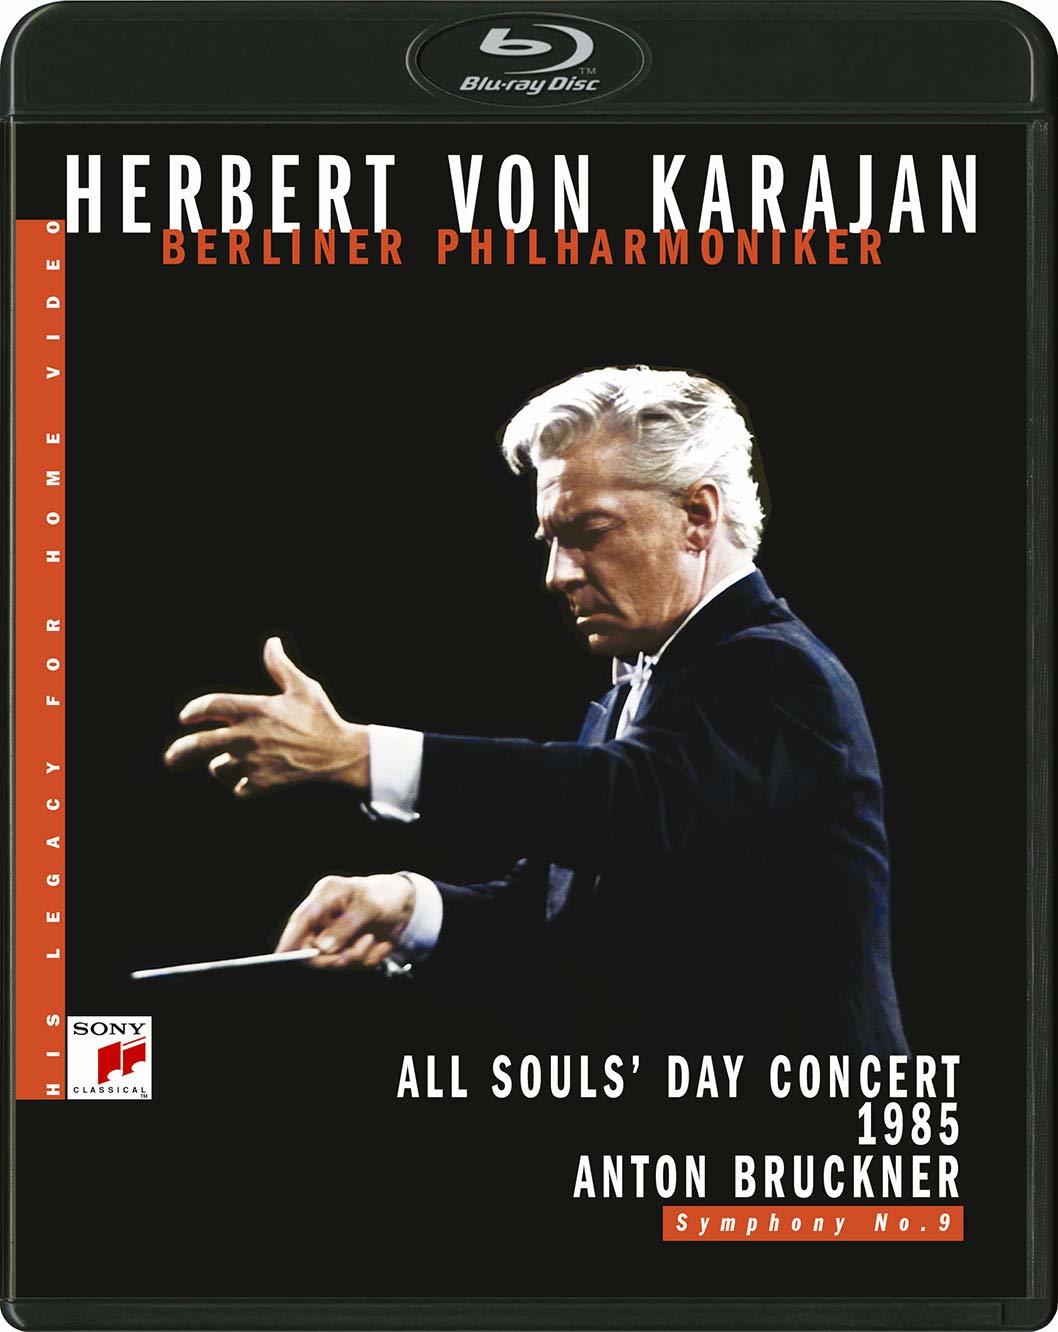 Bruckner: Symphony No. 9 Blu-ray (Herbert von Karajan / Berlin